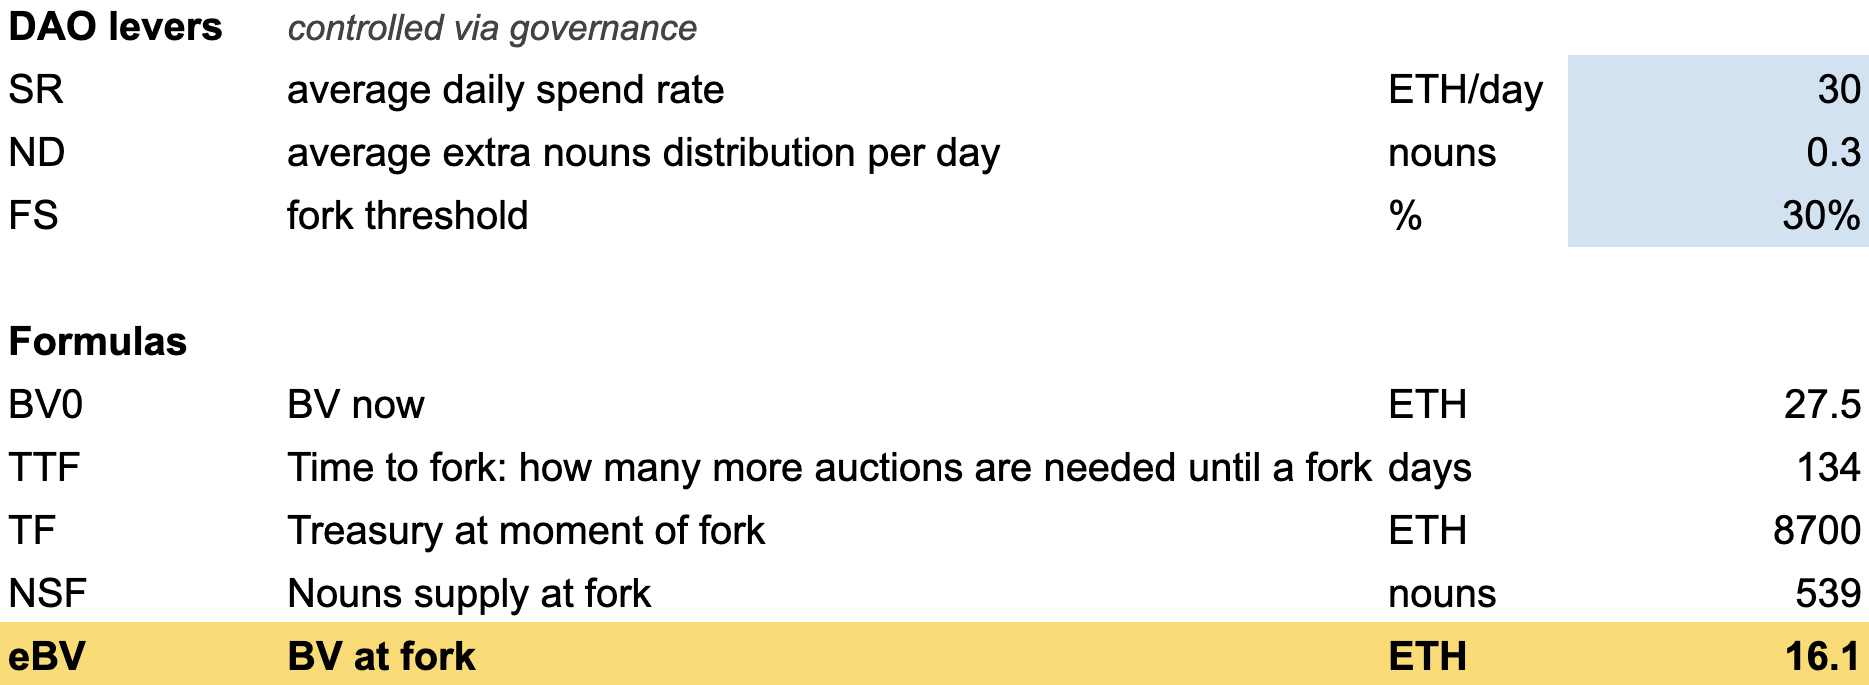 30% Fork Threshold, 0.3 nouns distribution per day